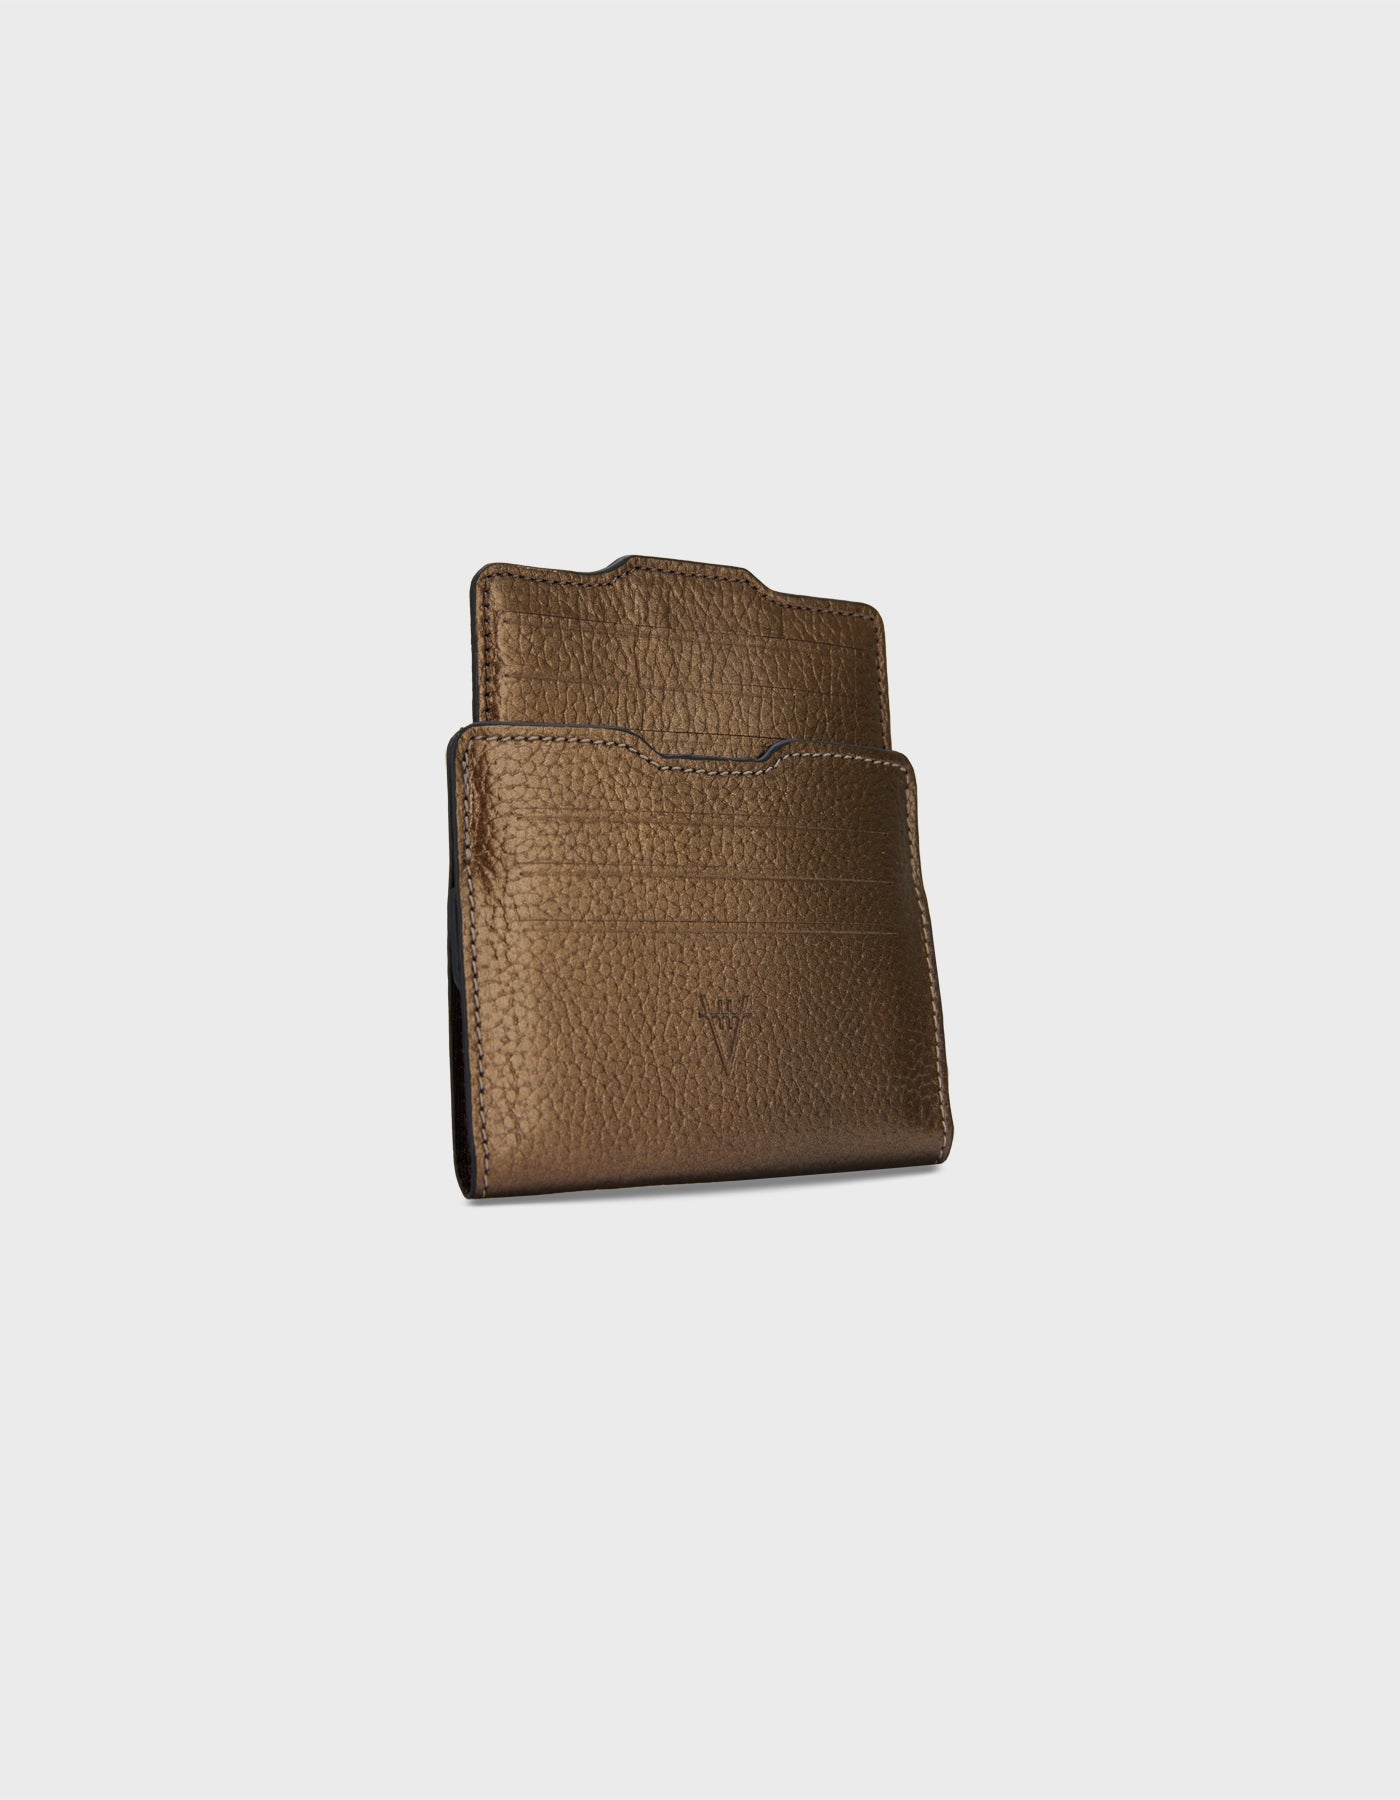 Hiva Atelier | Double Card Holder Bronze Gold | Beautiful and Versatile